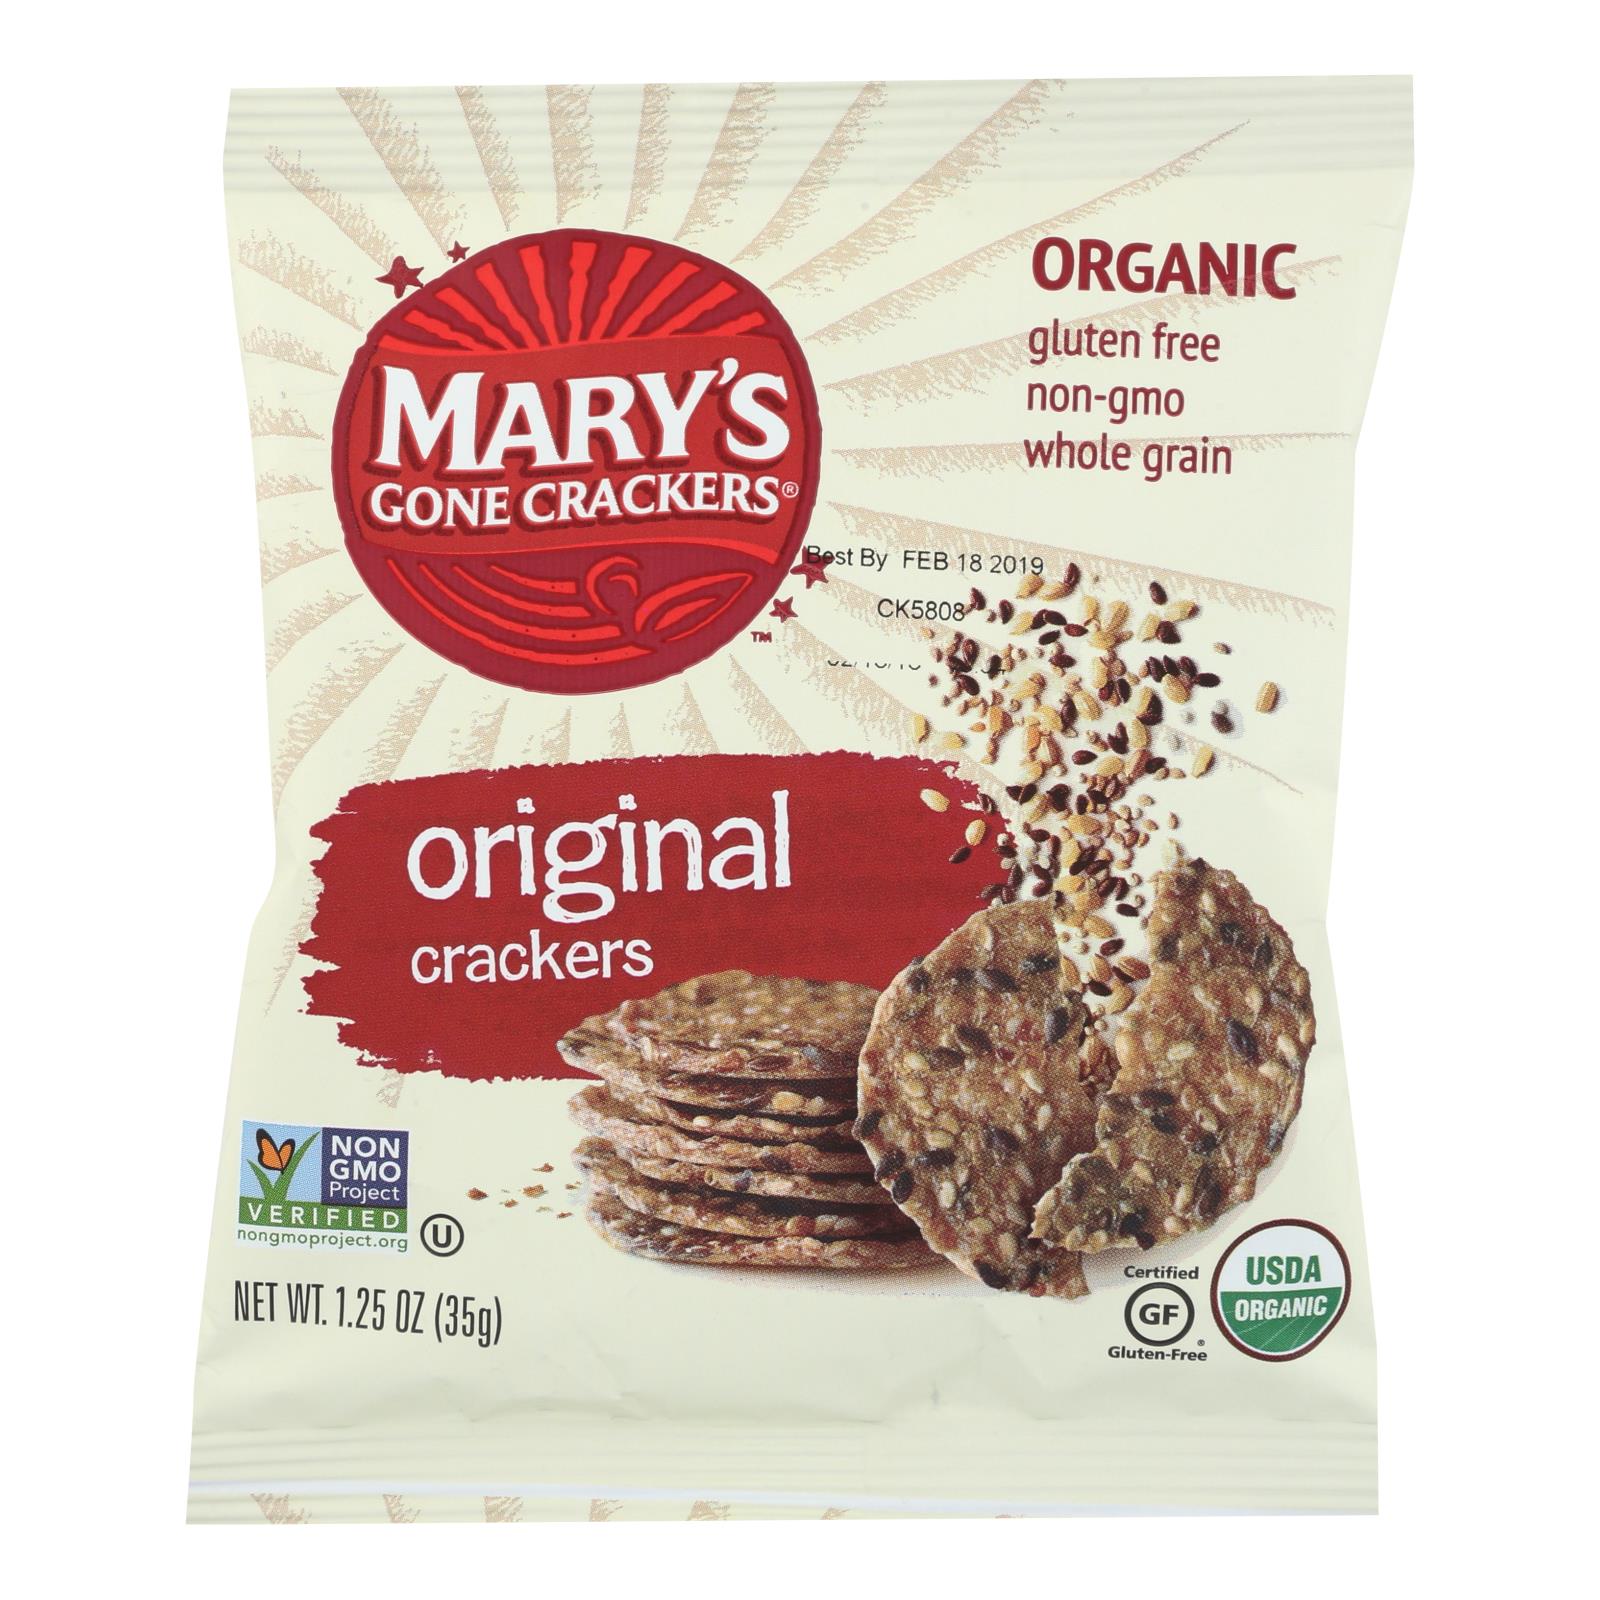 Mary's Gone Crackers Original Crackers - 20개 묶음상품 - 1.25 OZ